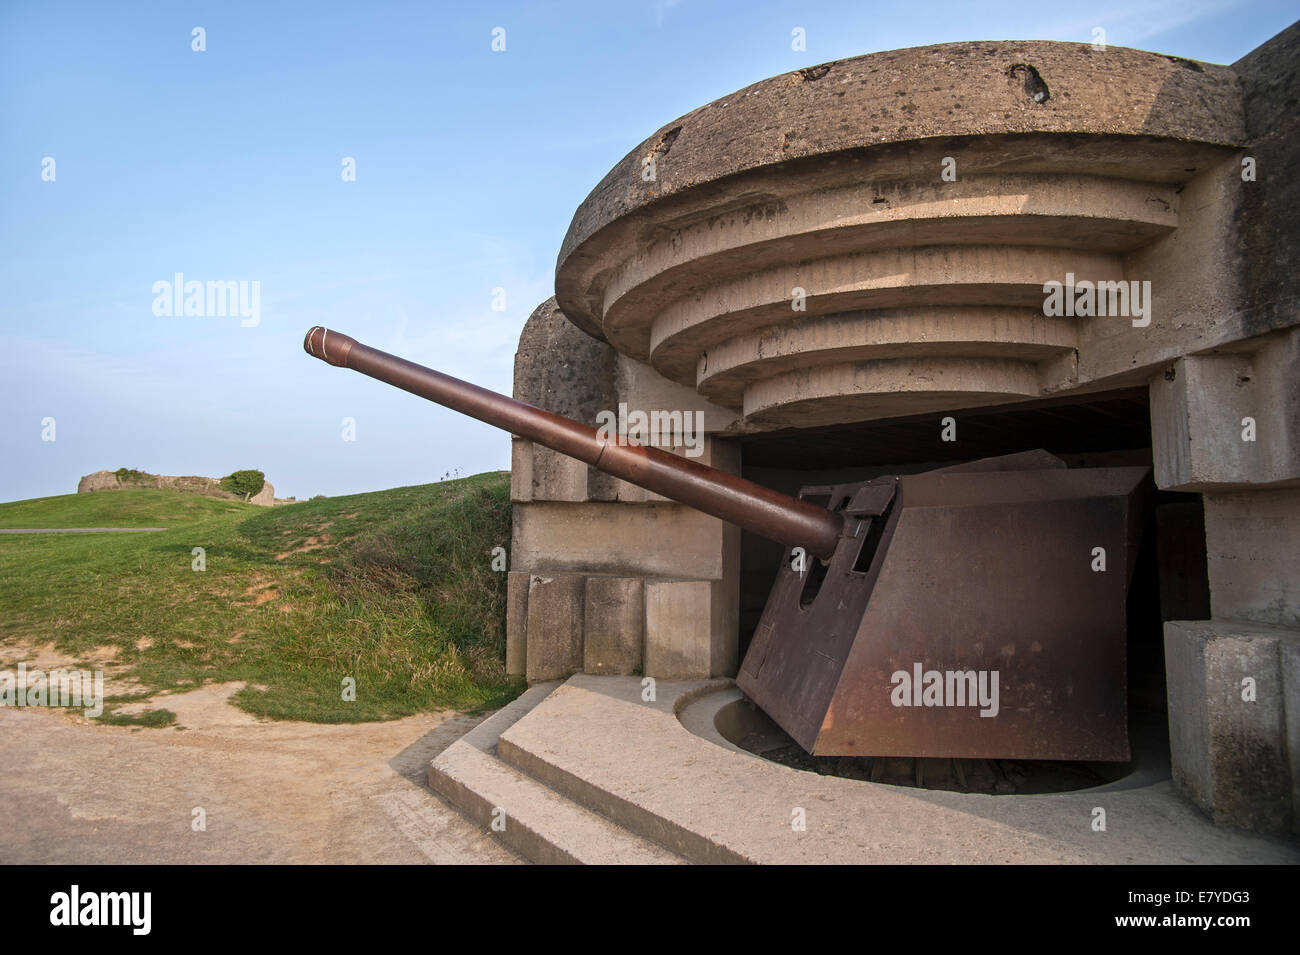 Il tedesco 152 mm pistola Navy nel bunker della batteria Le Chaos, parte dell'Atlantikwall a Longues-sur-Mer, Normandia, Francia Foto Stock